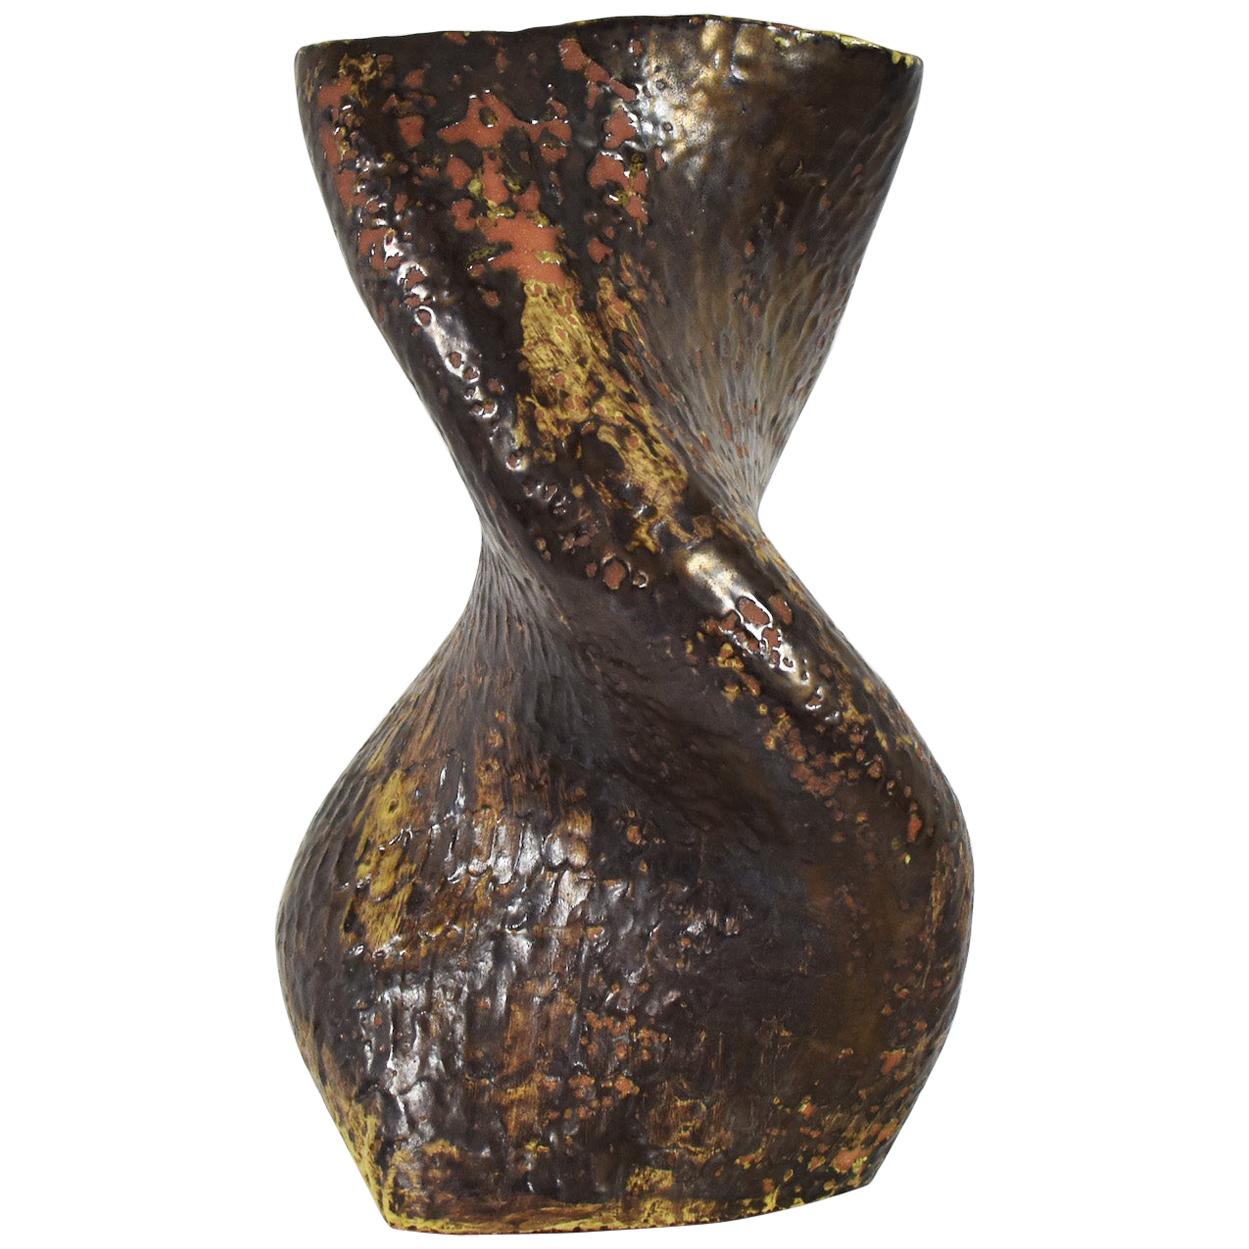 Stunning Ceramic Vase by Ole Victor, Denmark, 2005